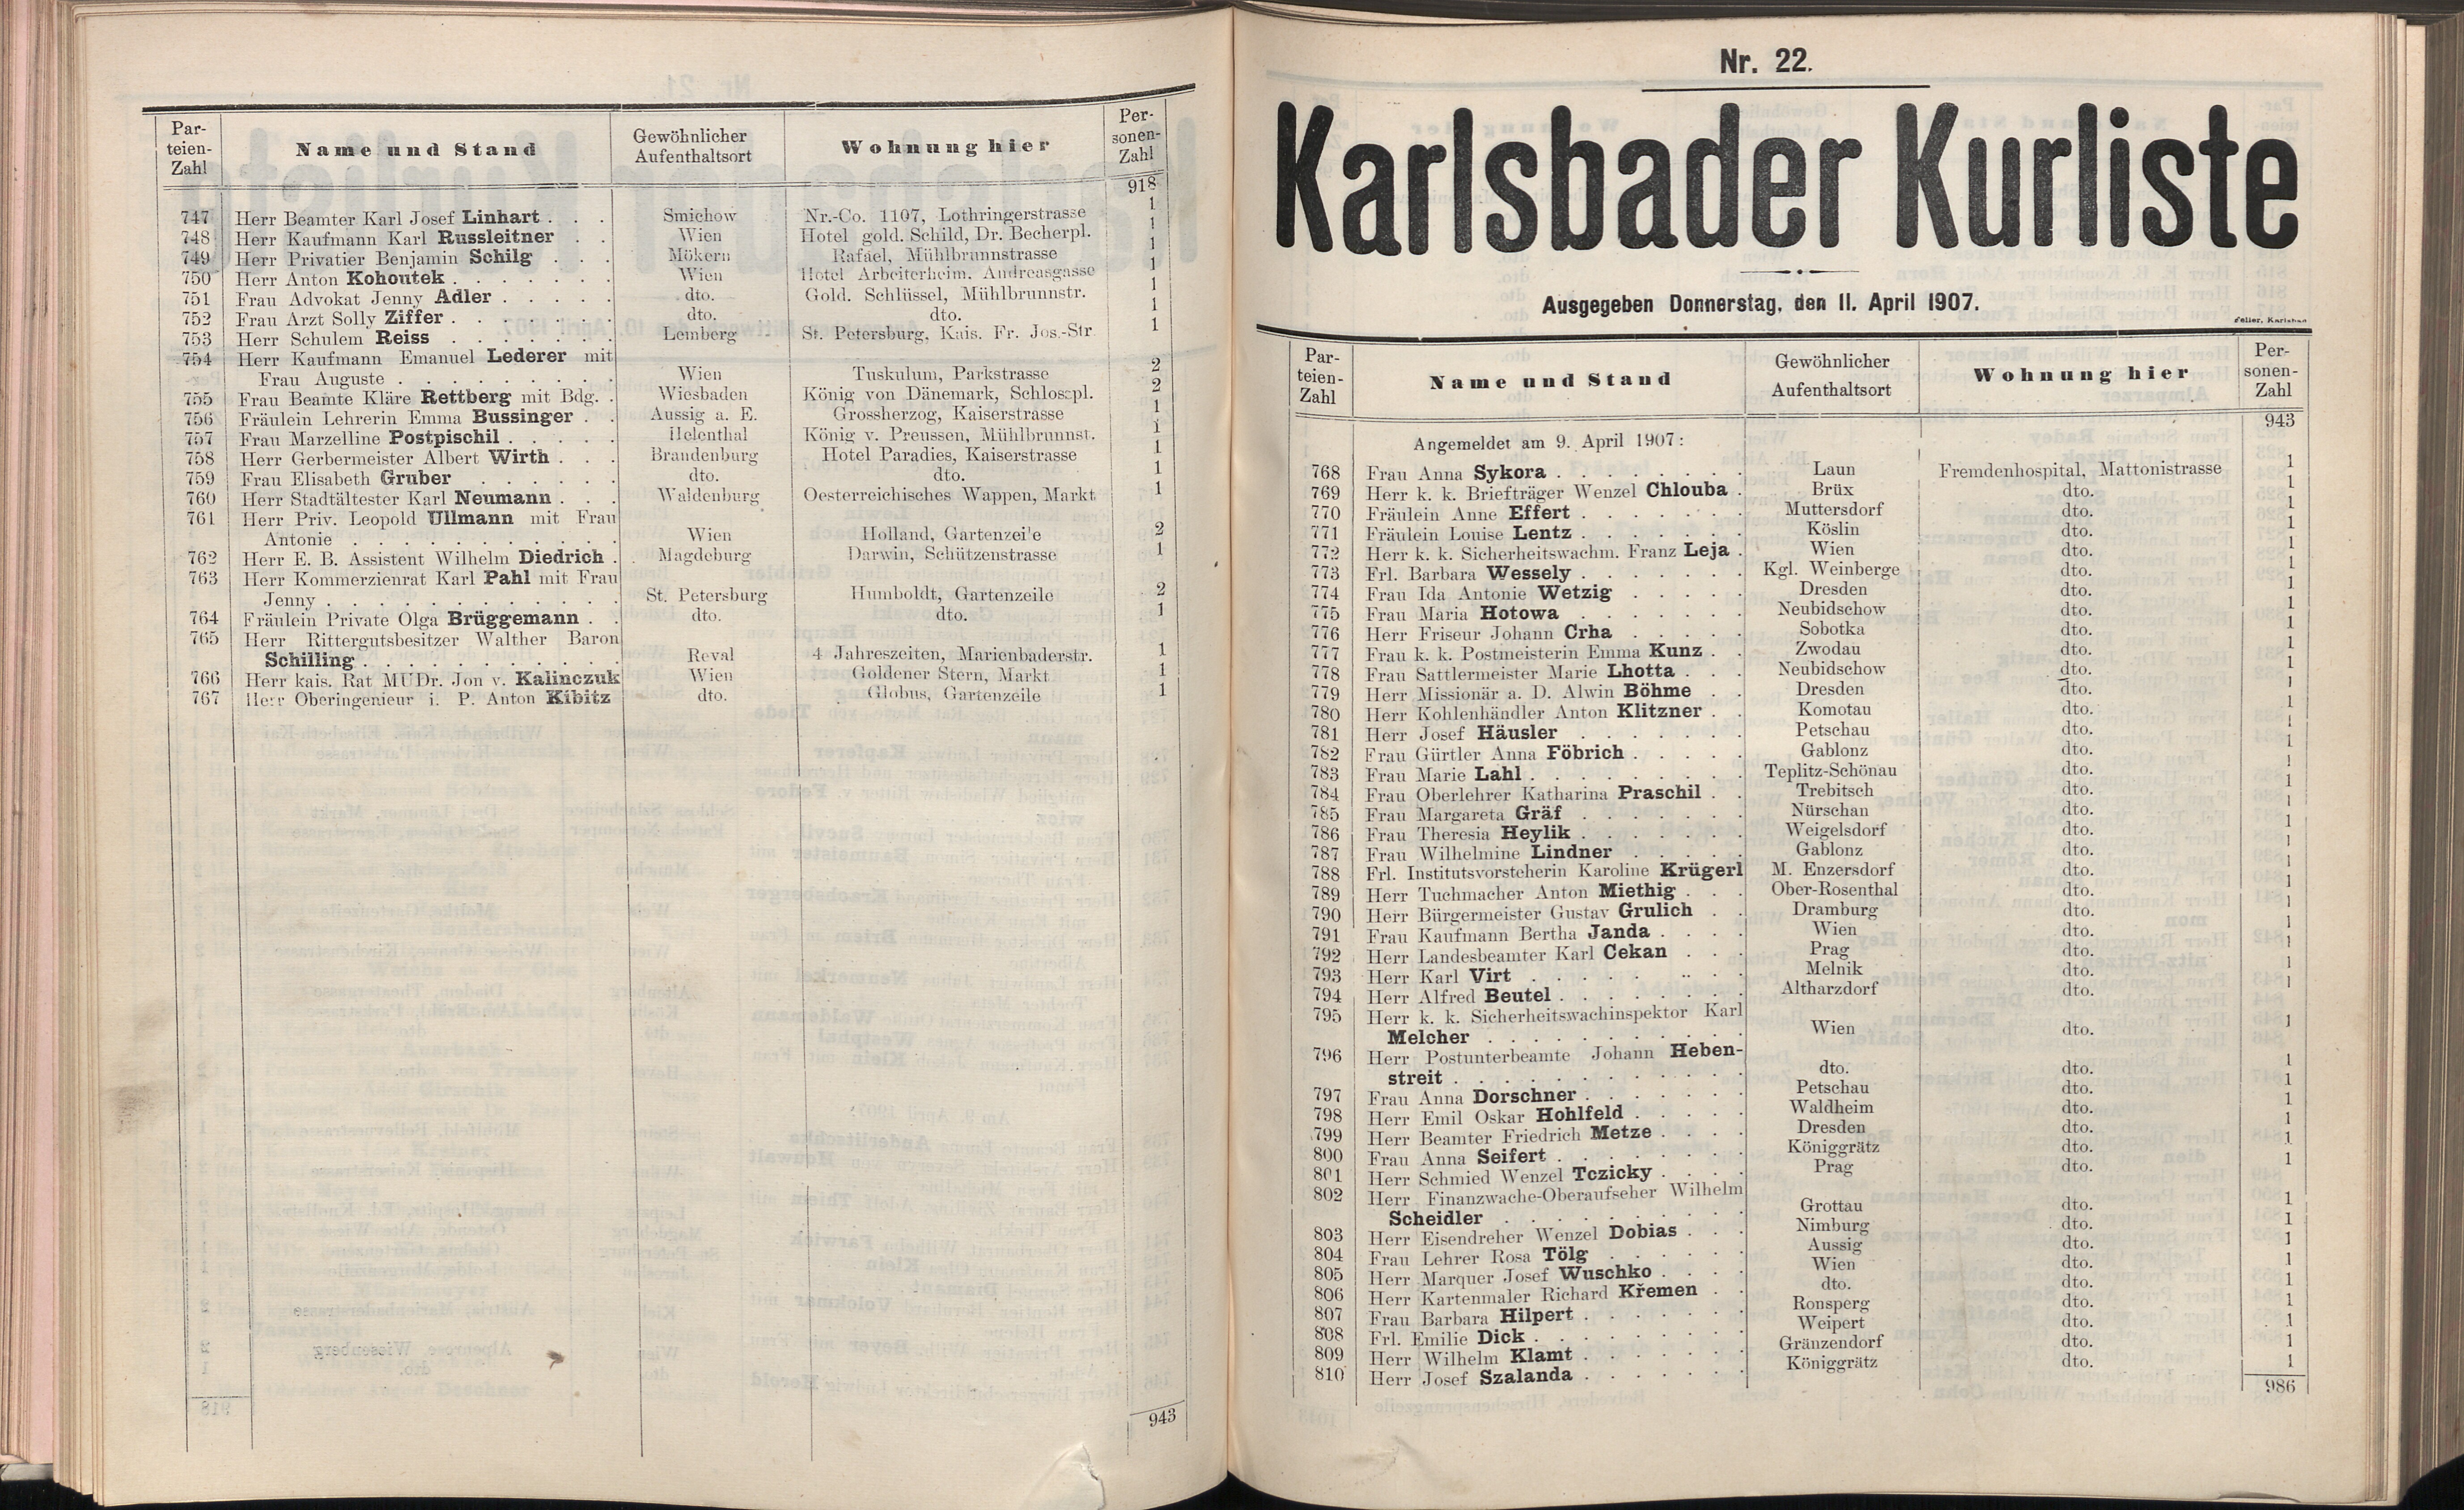 135. soap-kv_knihovna_karlsbader-kurliste-1907_1360